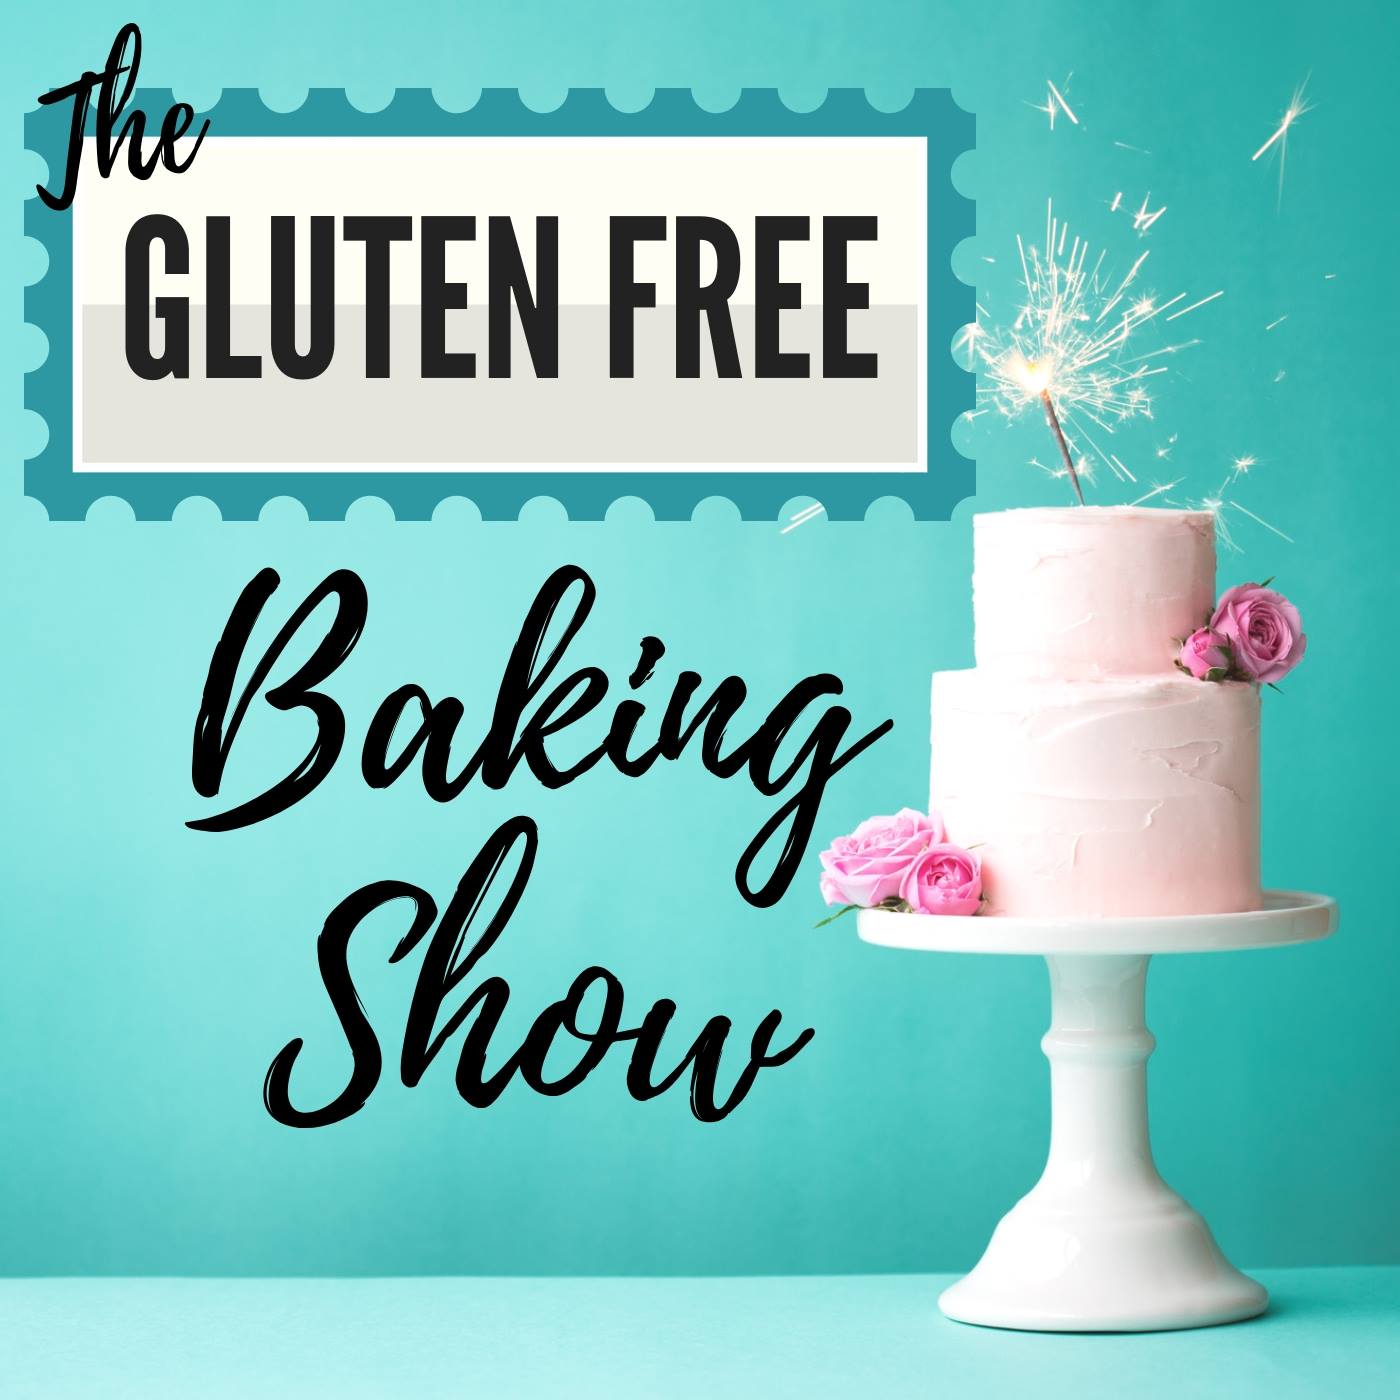 The Gluten Free Baking Show logo